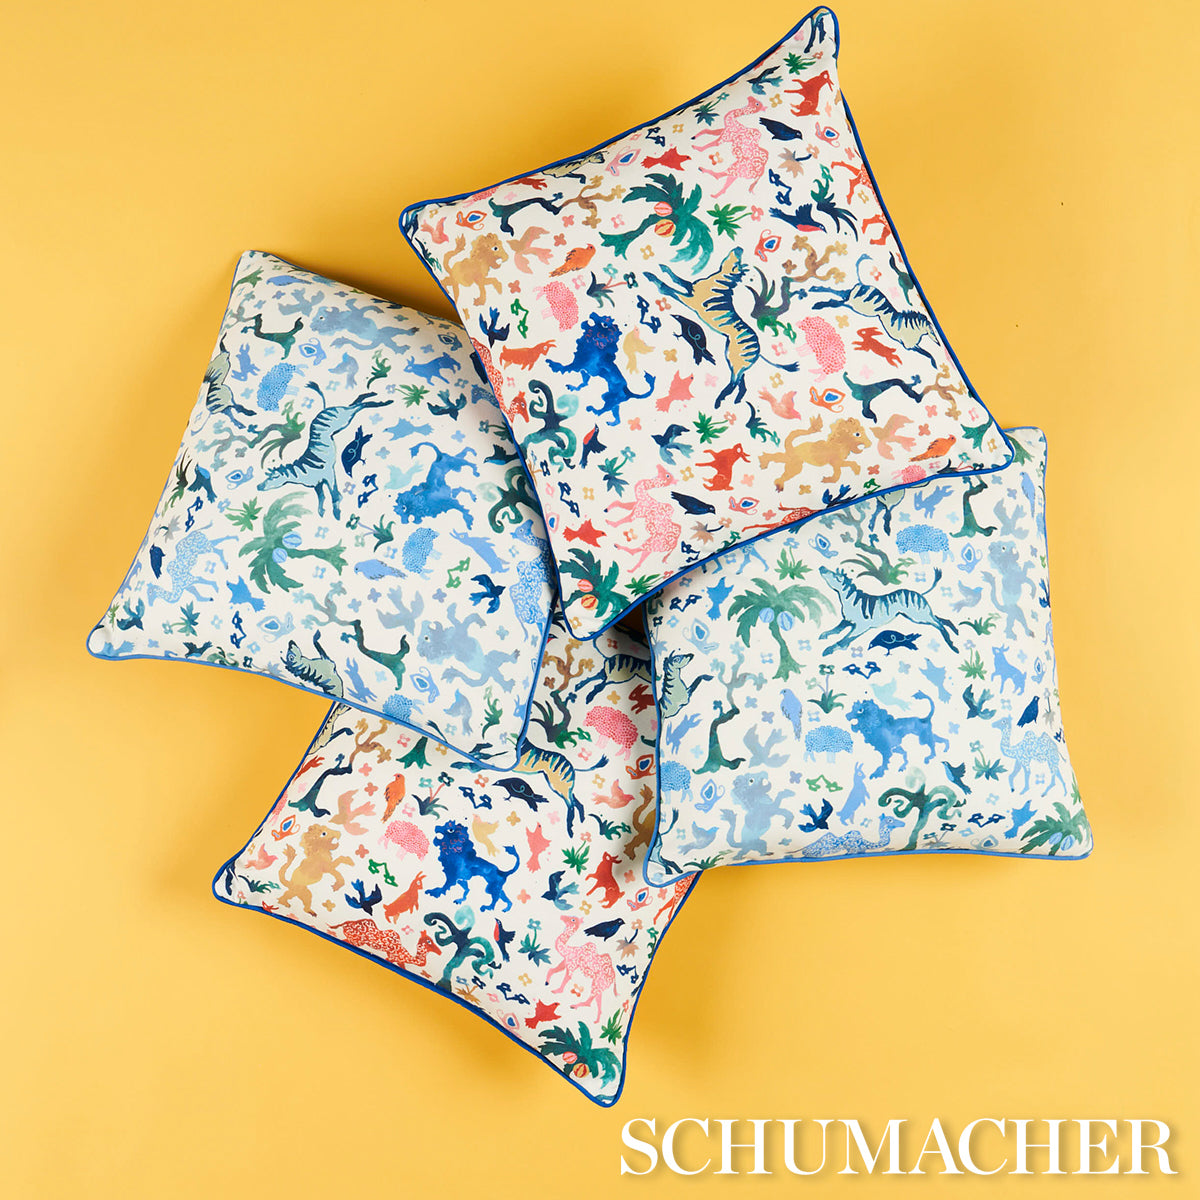 Purchase So18159106 | Beasts Pillow, Blue And Green - Schumacher Pillows